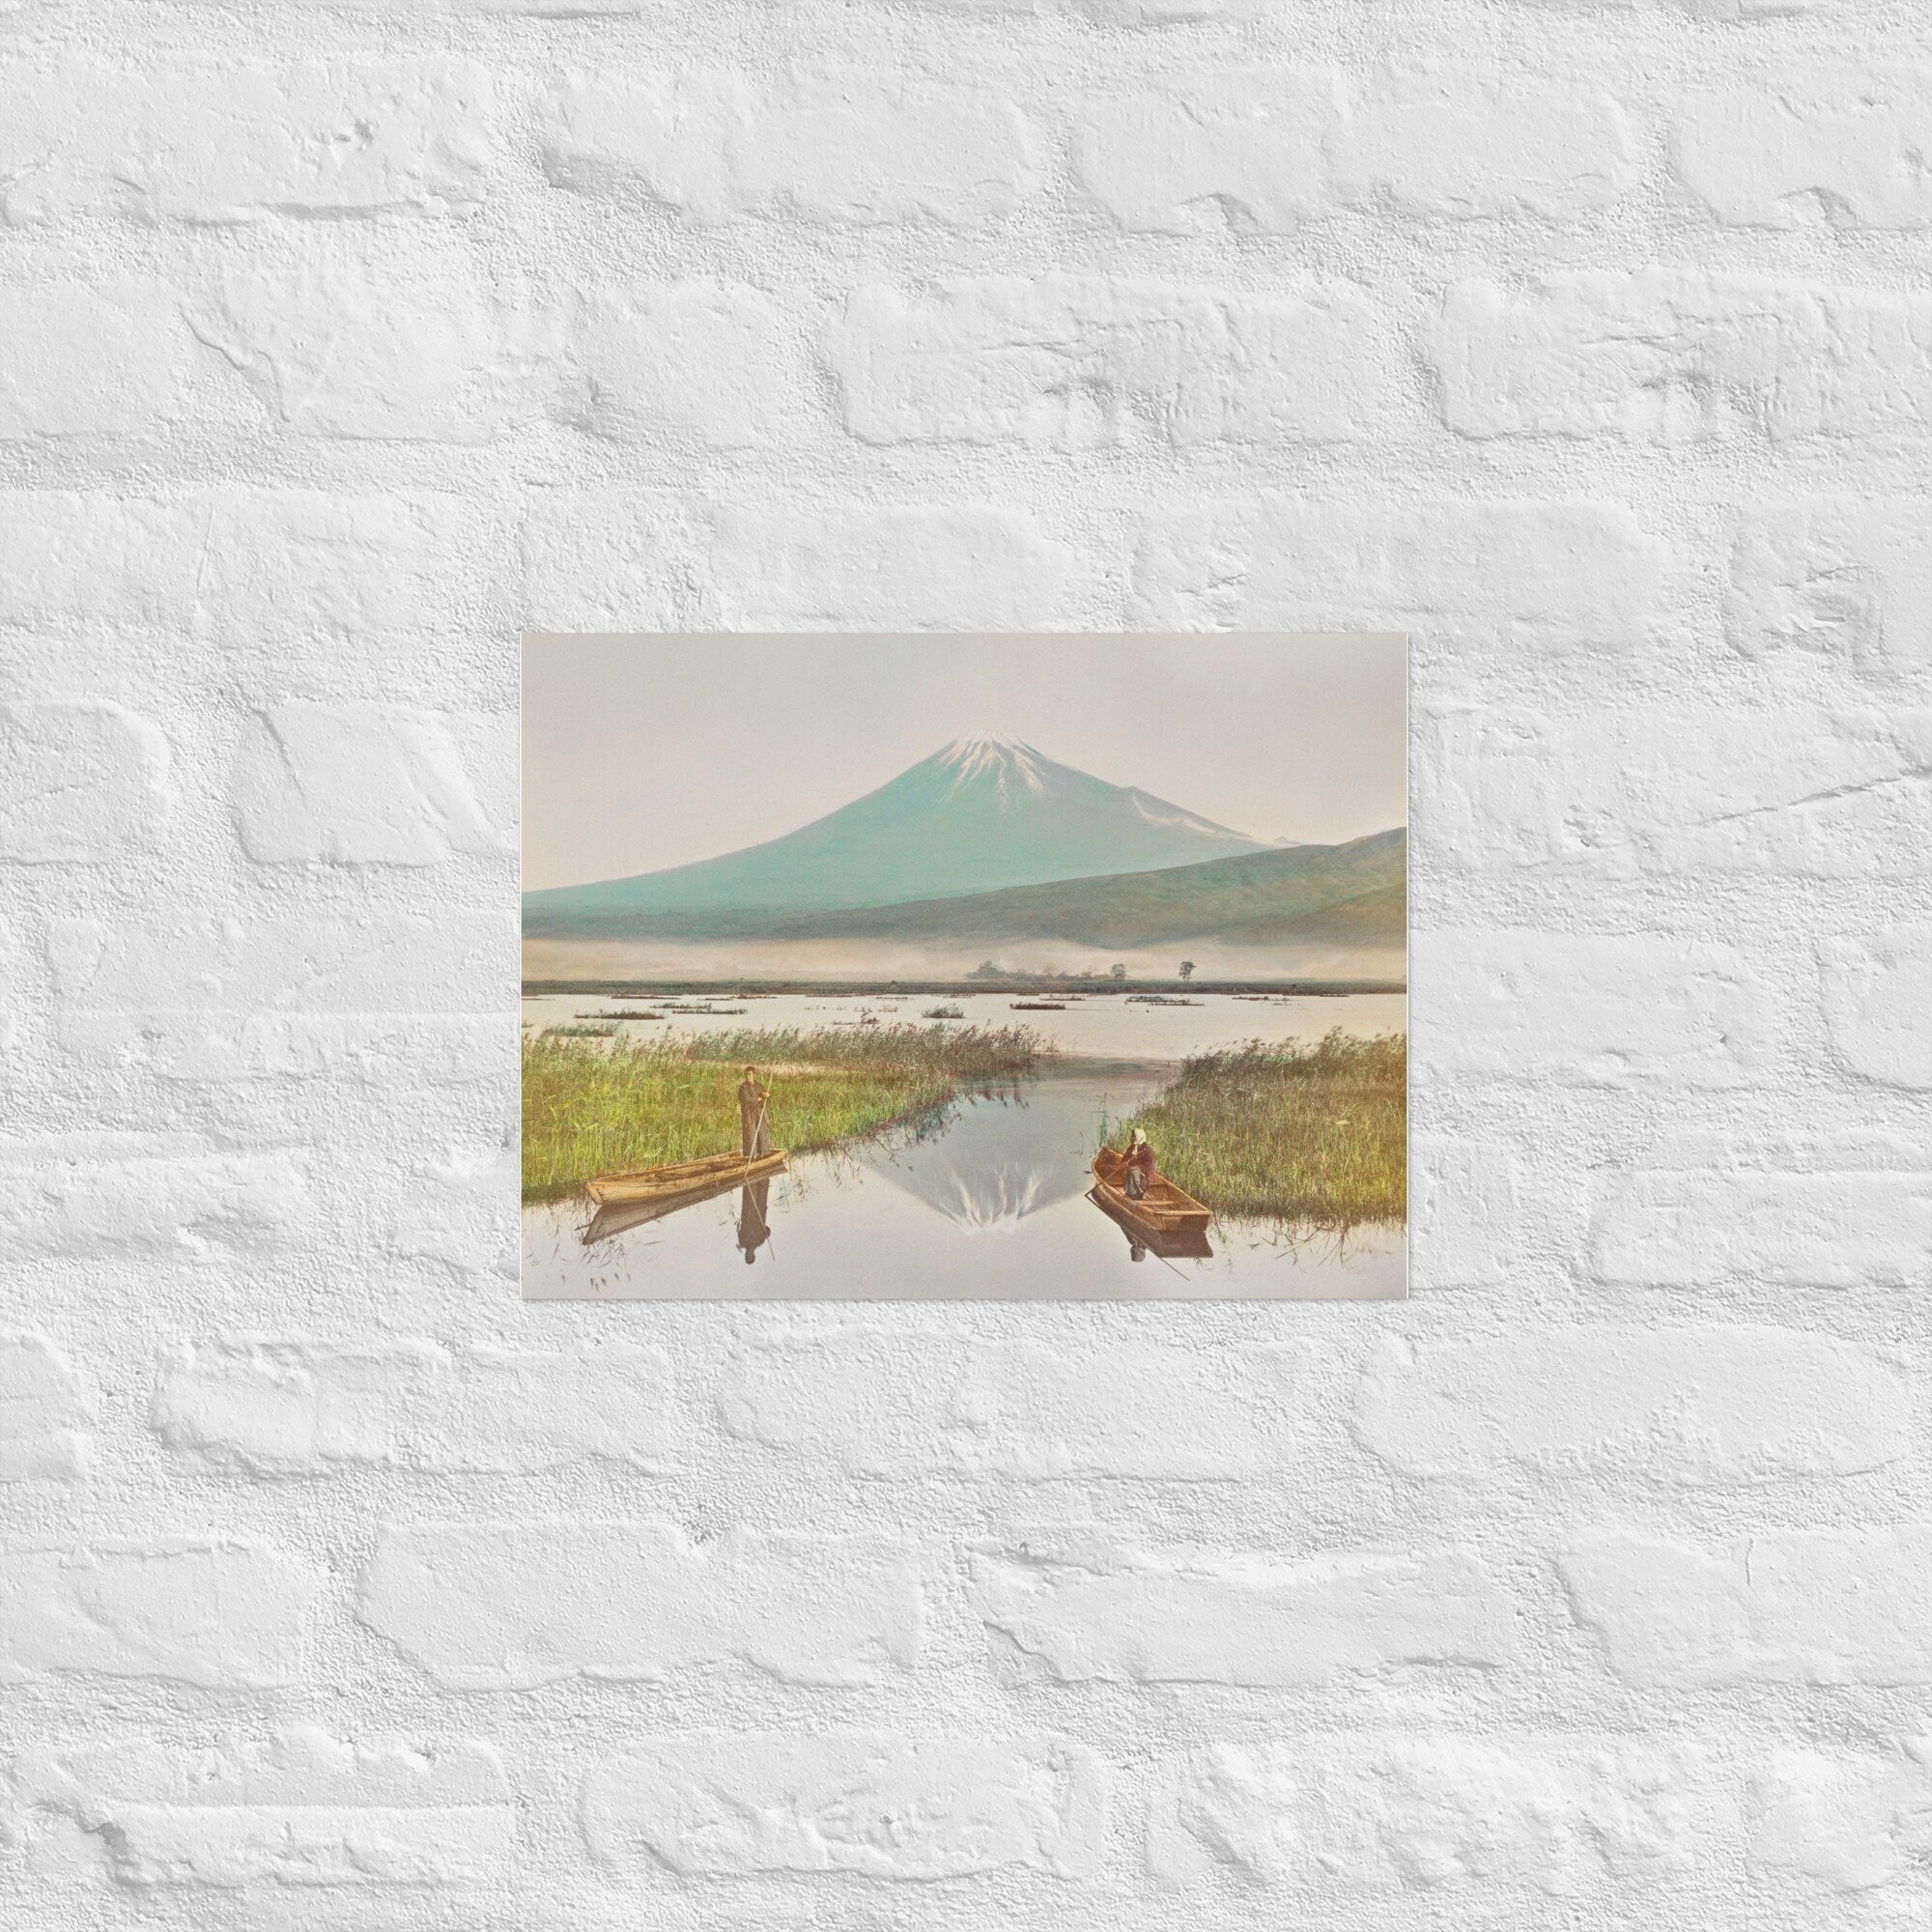 Stunning Poster Print Wall Art of Mount Fuji as Seen from Kashiwabara by Kazumasa Ogawa | Wall Hanging Vintage Photo Decor